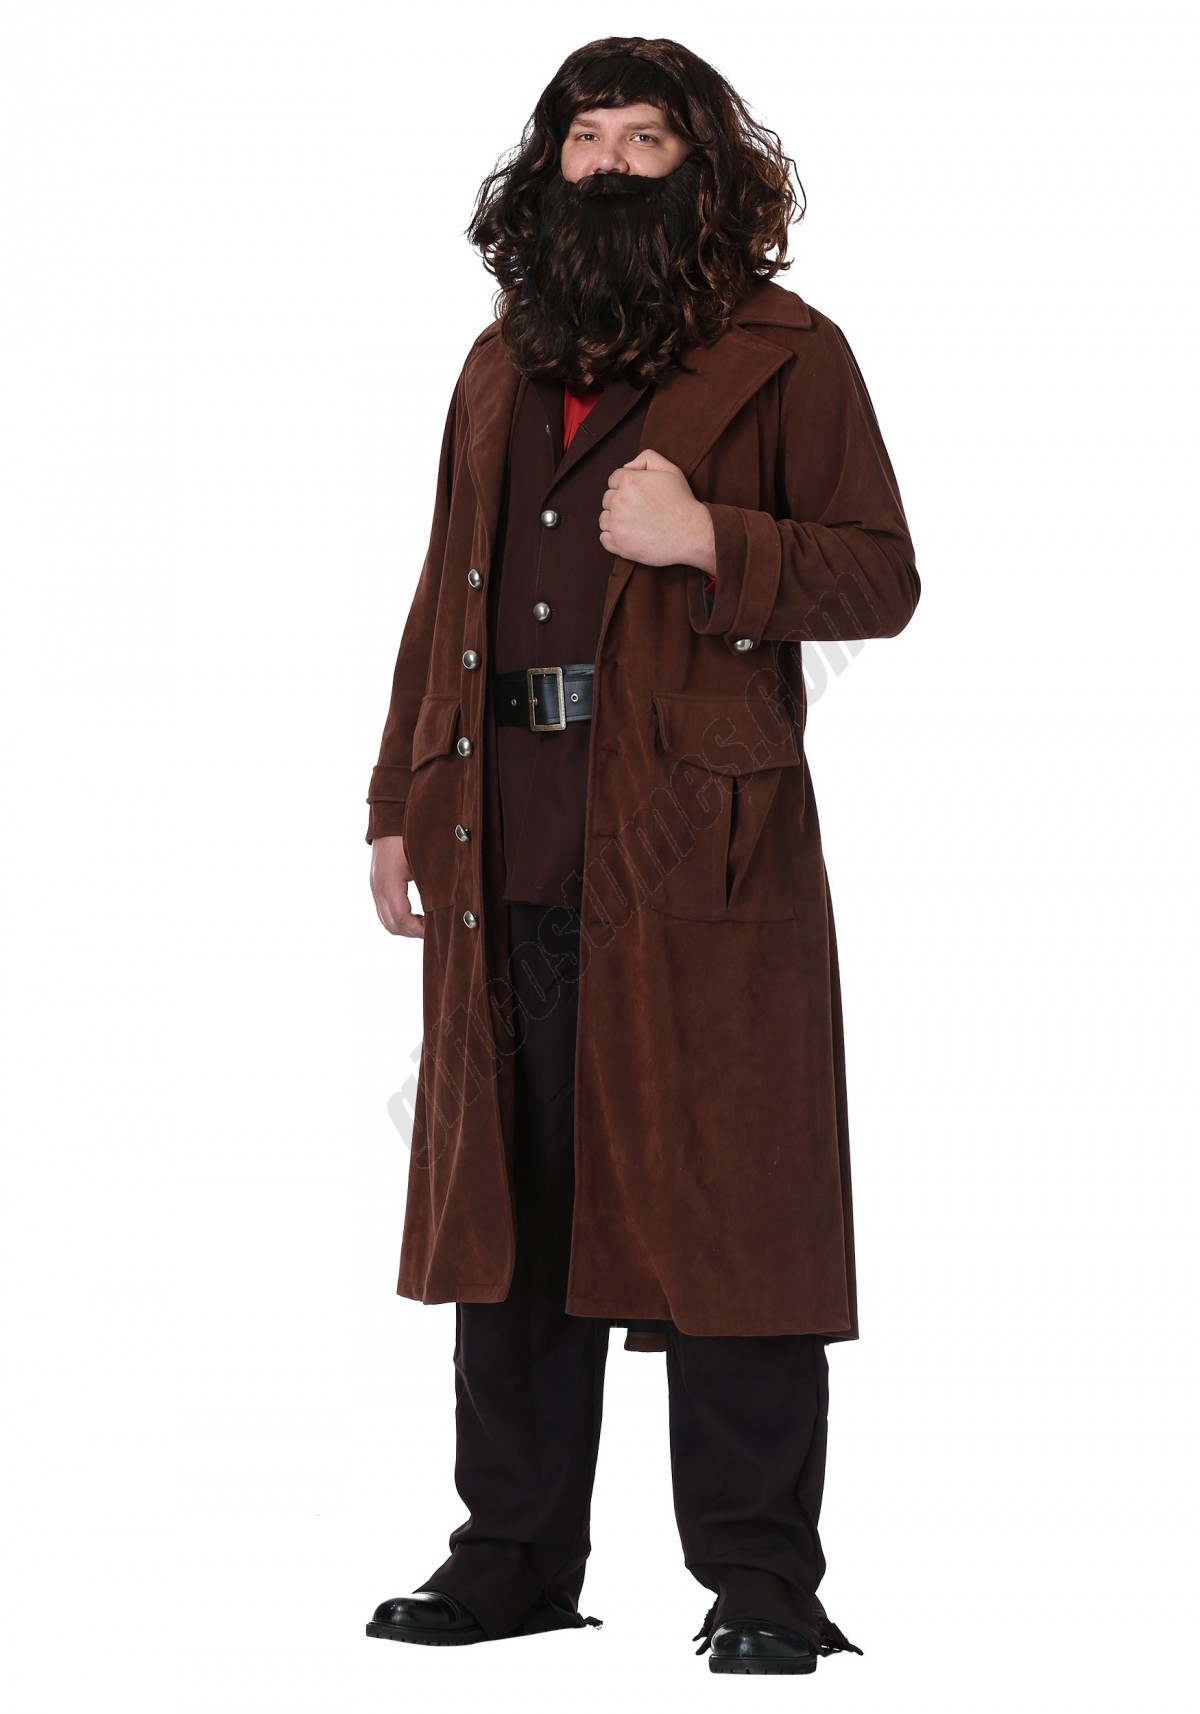 Harry Potter Deluxe Hagrid Plus Size Men's Costume Promotions - -0